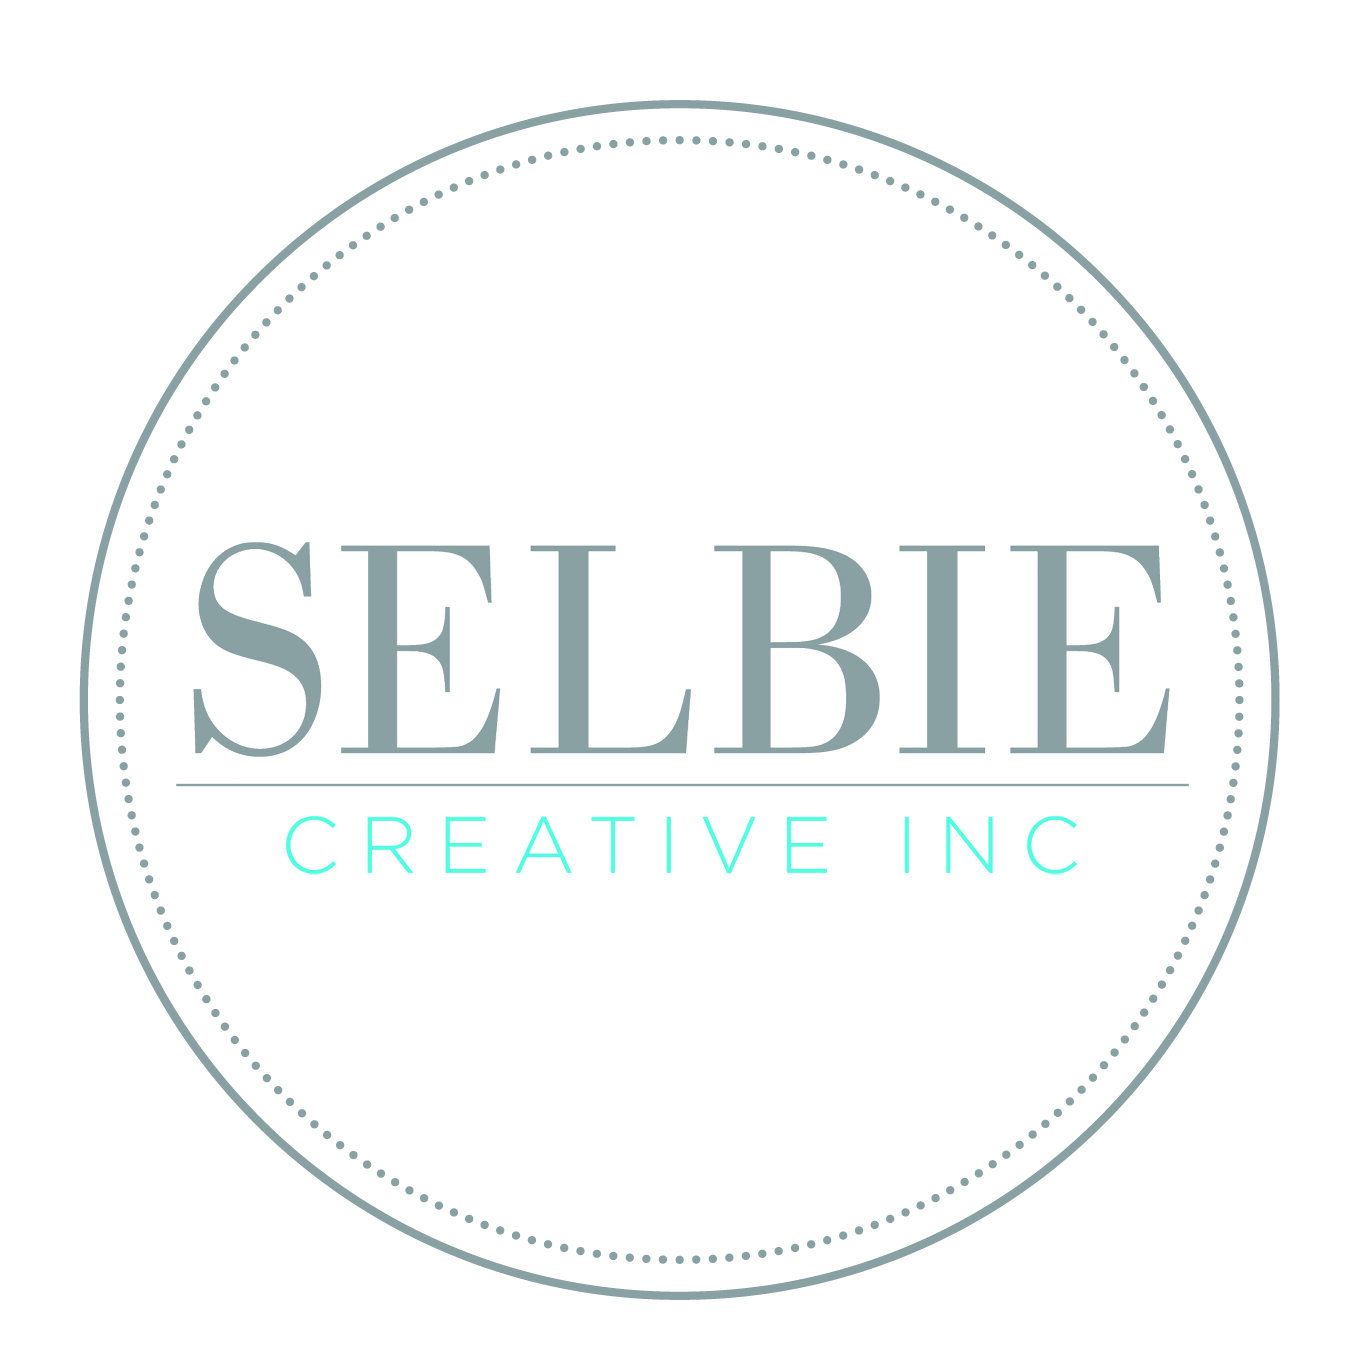 Selbie Creative Inc.